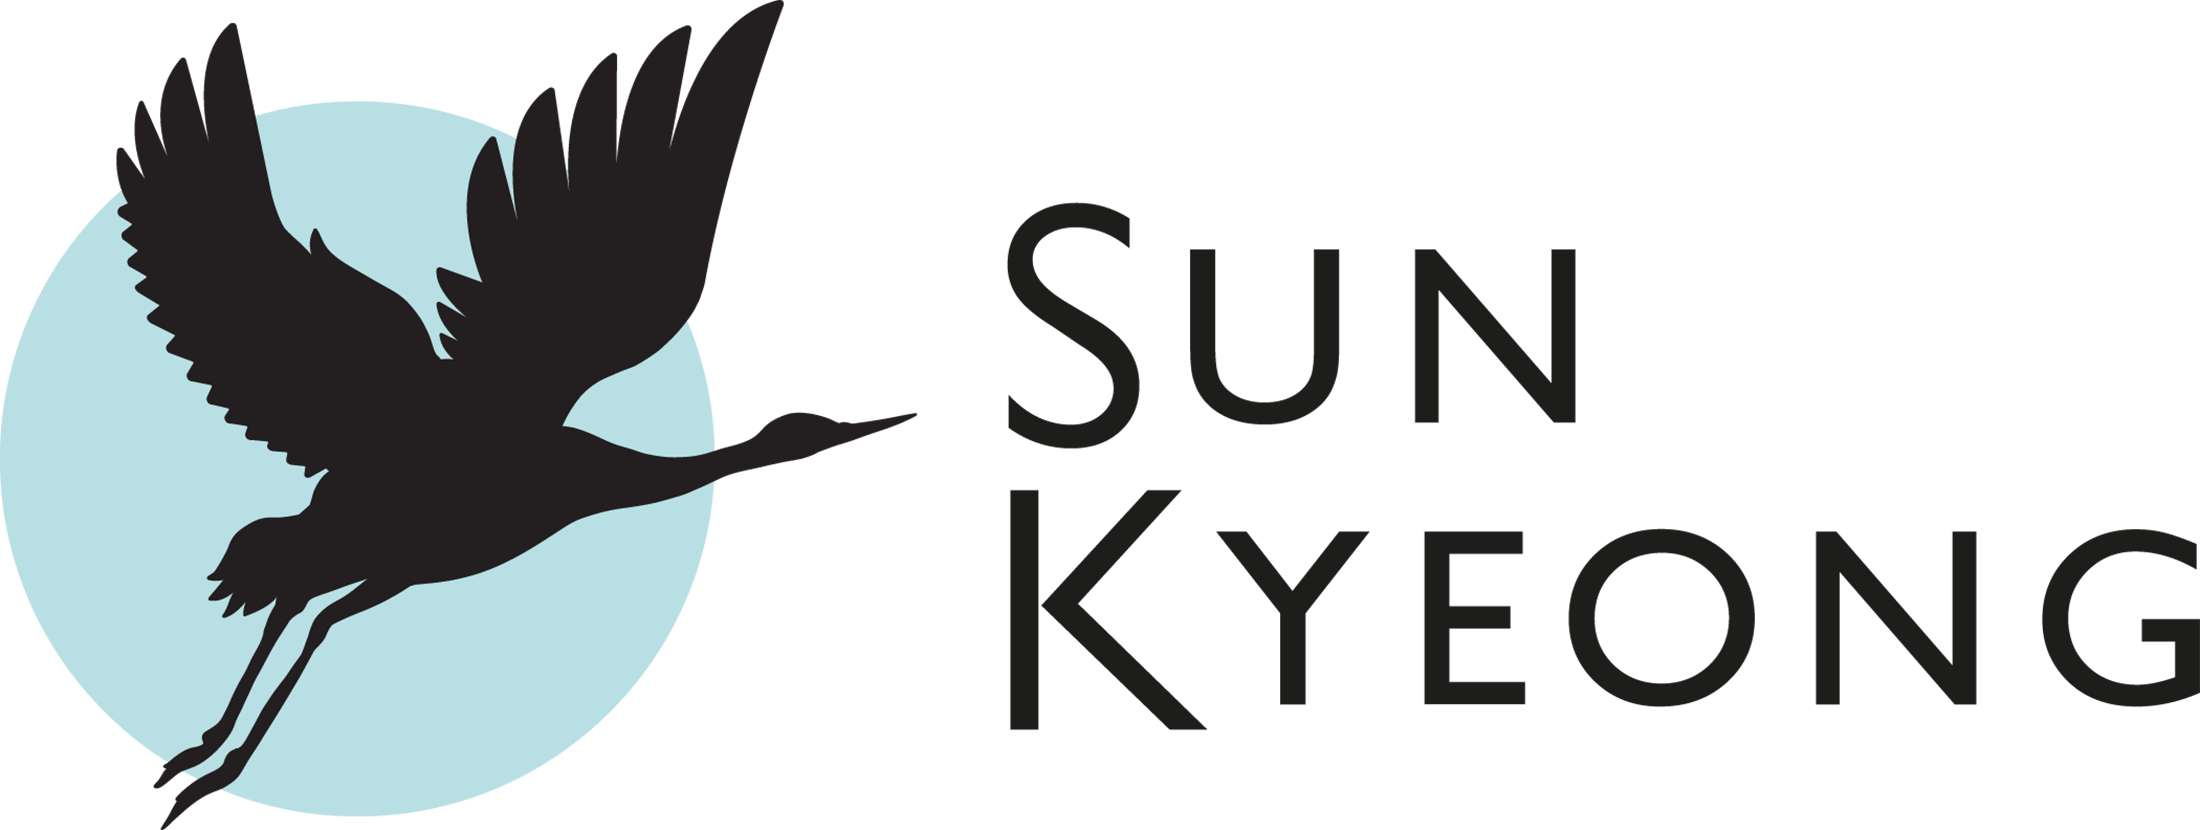 Sun Kyeong logo